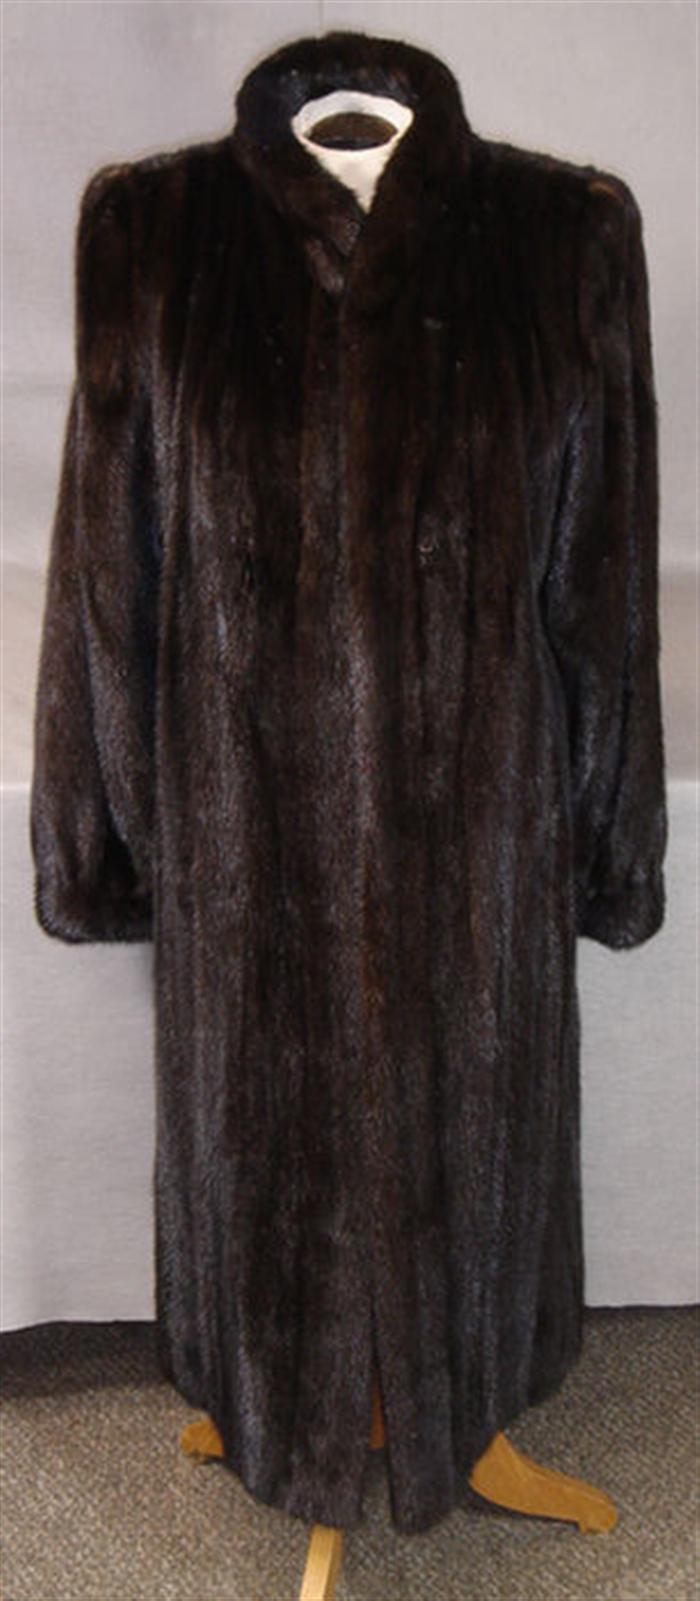 Black full length fur coat, about